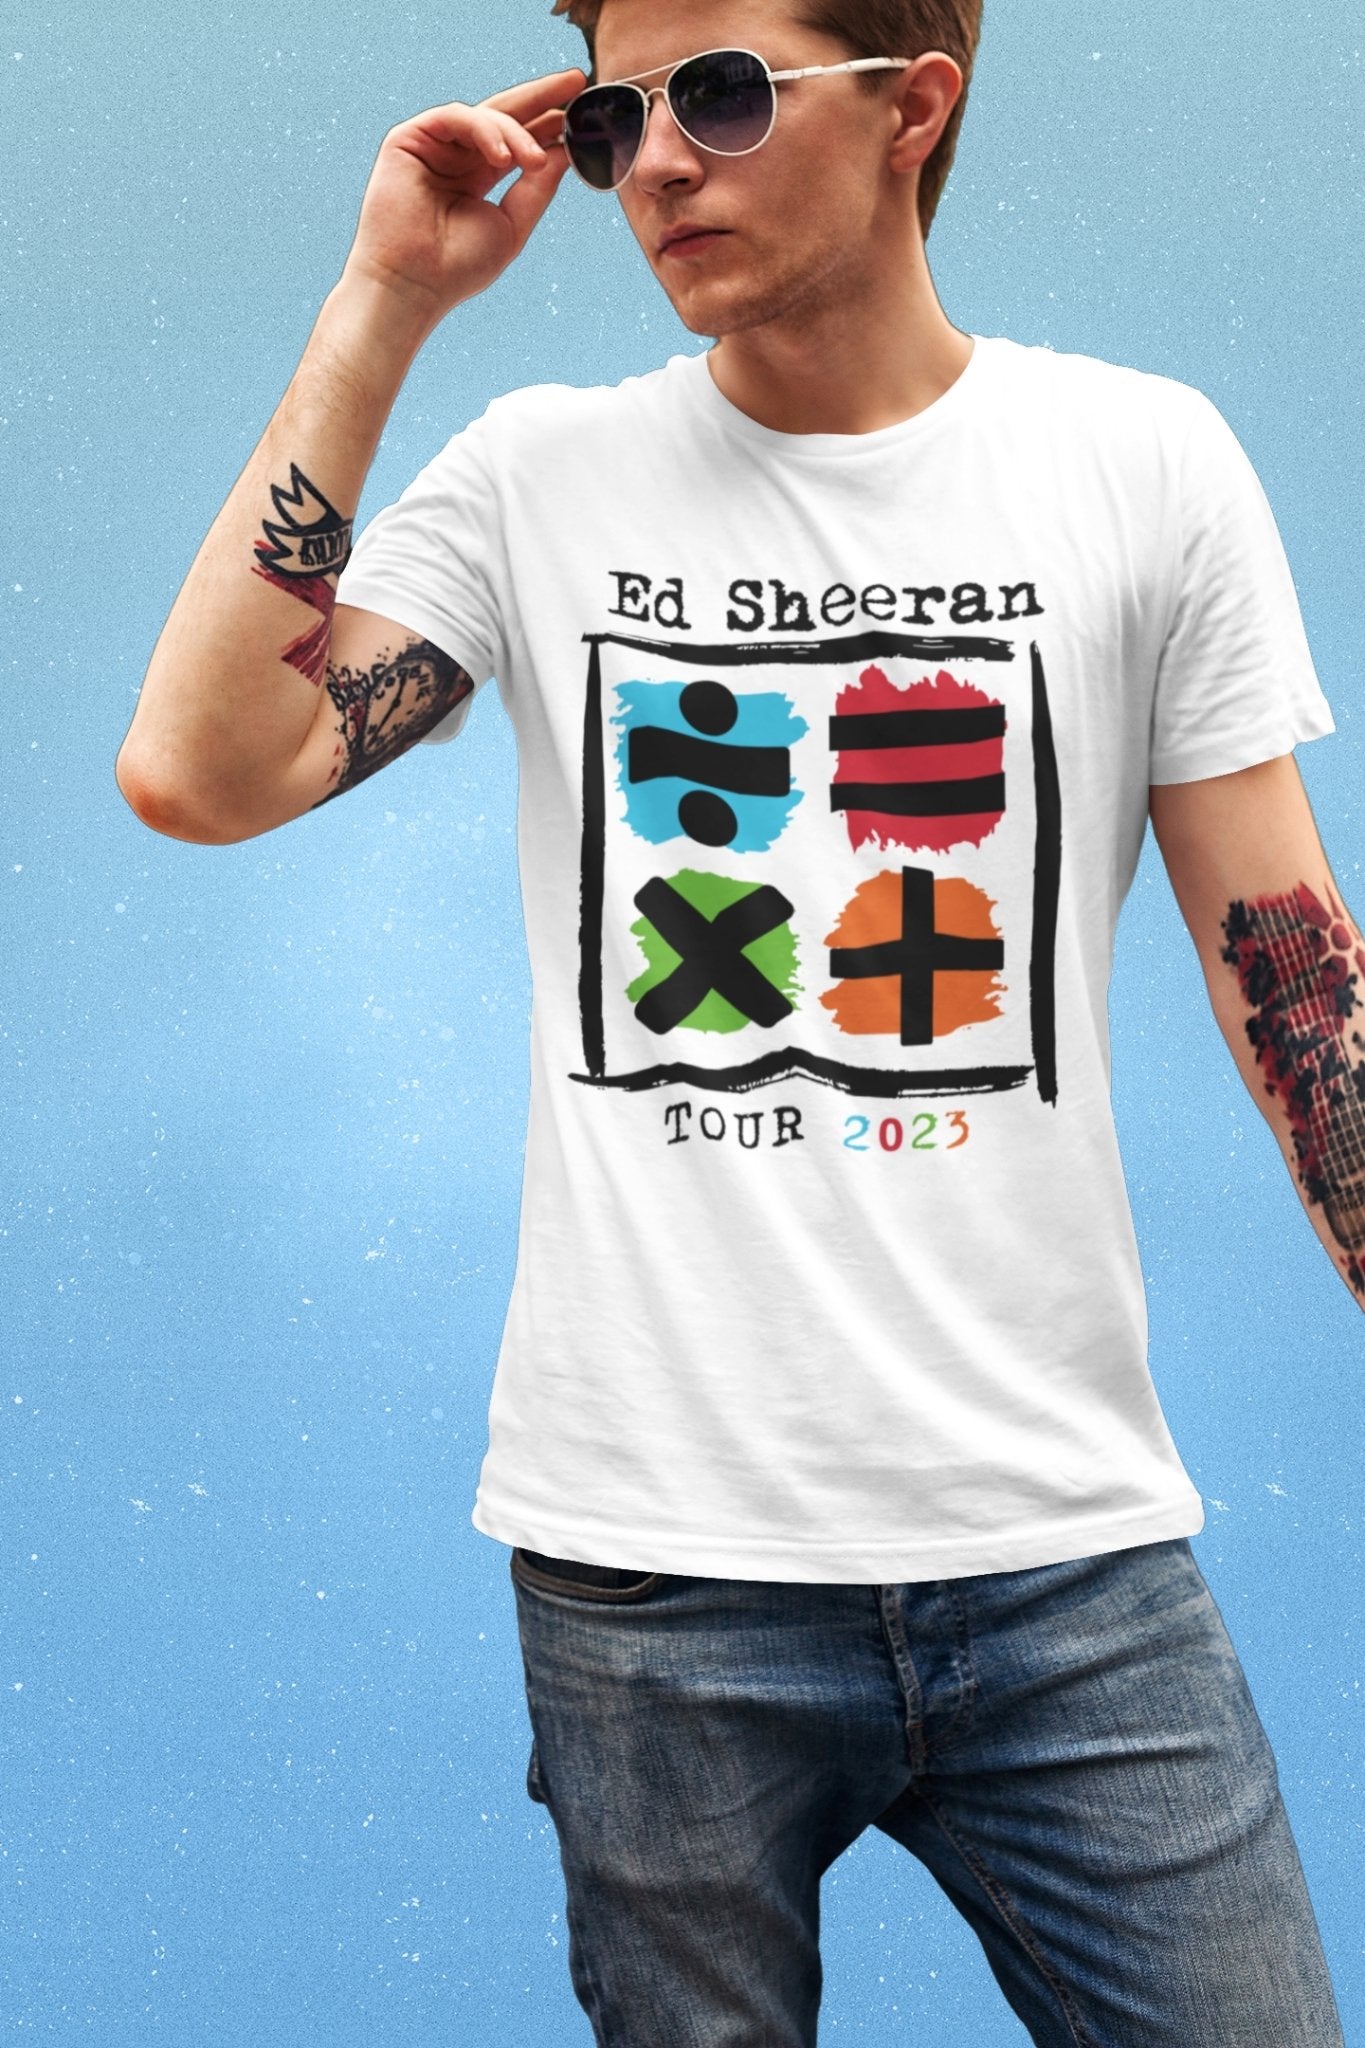 Ed Sheeran Mathematics Tour 2023 T-shirt, Math Signs - Three2Tango Tee's